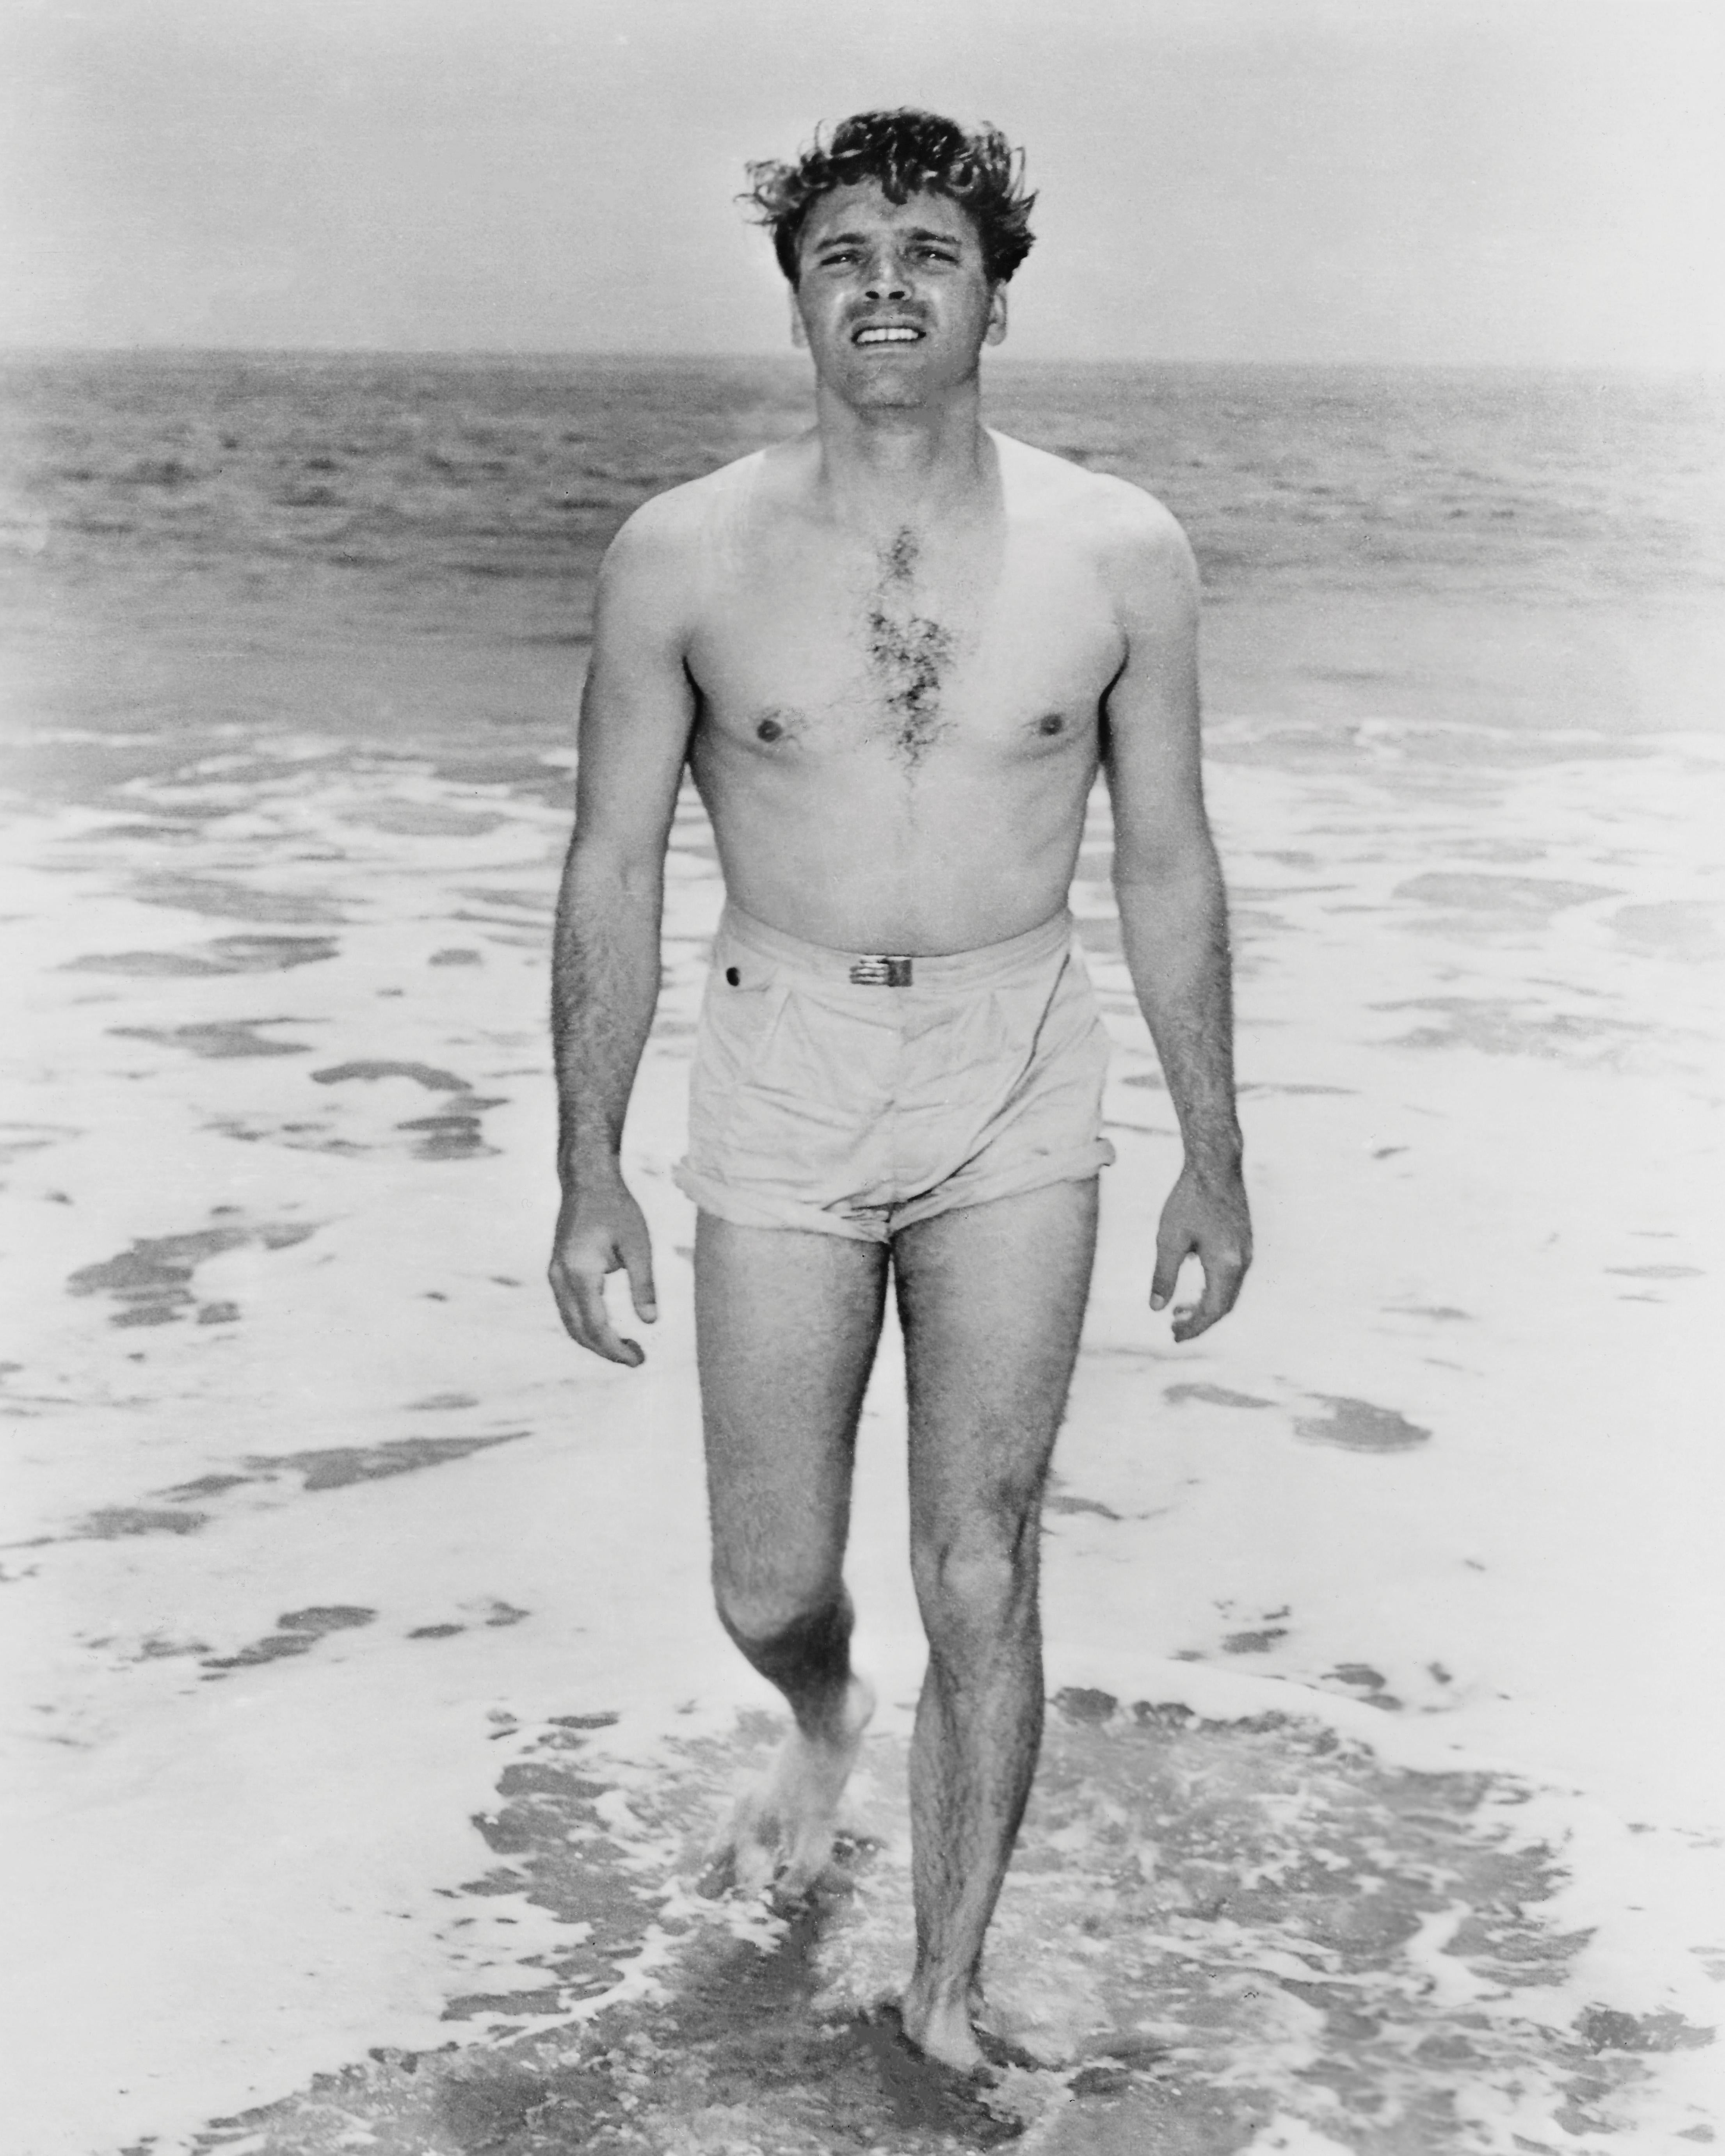 Unknown Portrait Photograph - Burt Lancaster Smiling Shirtless on the Shore Fine Art Print